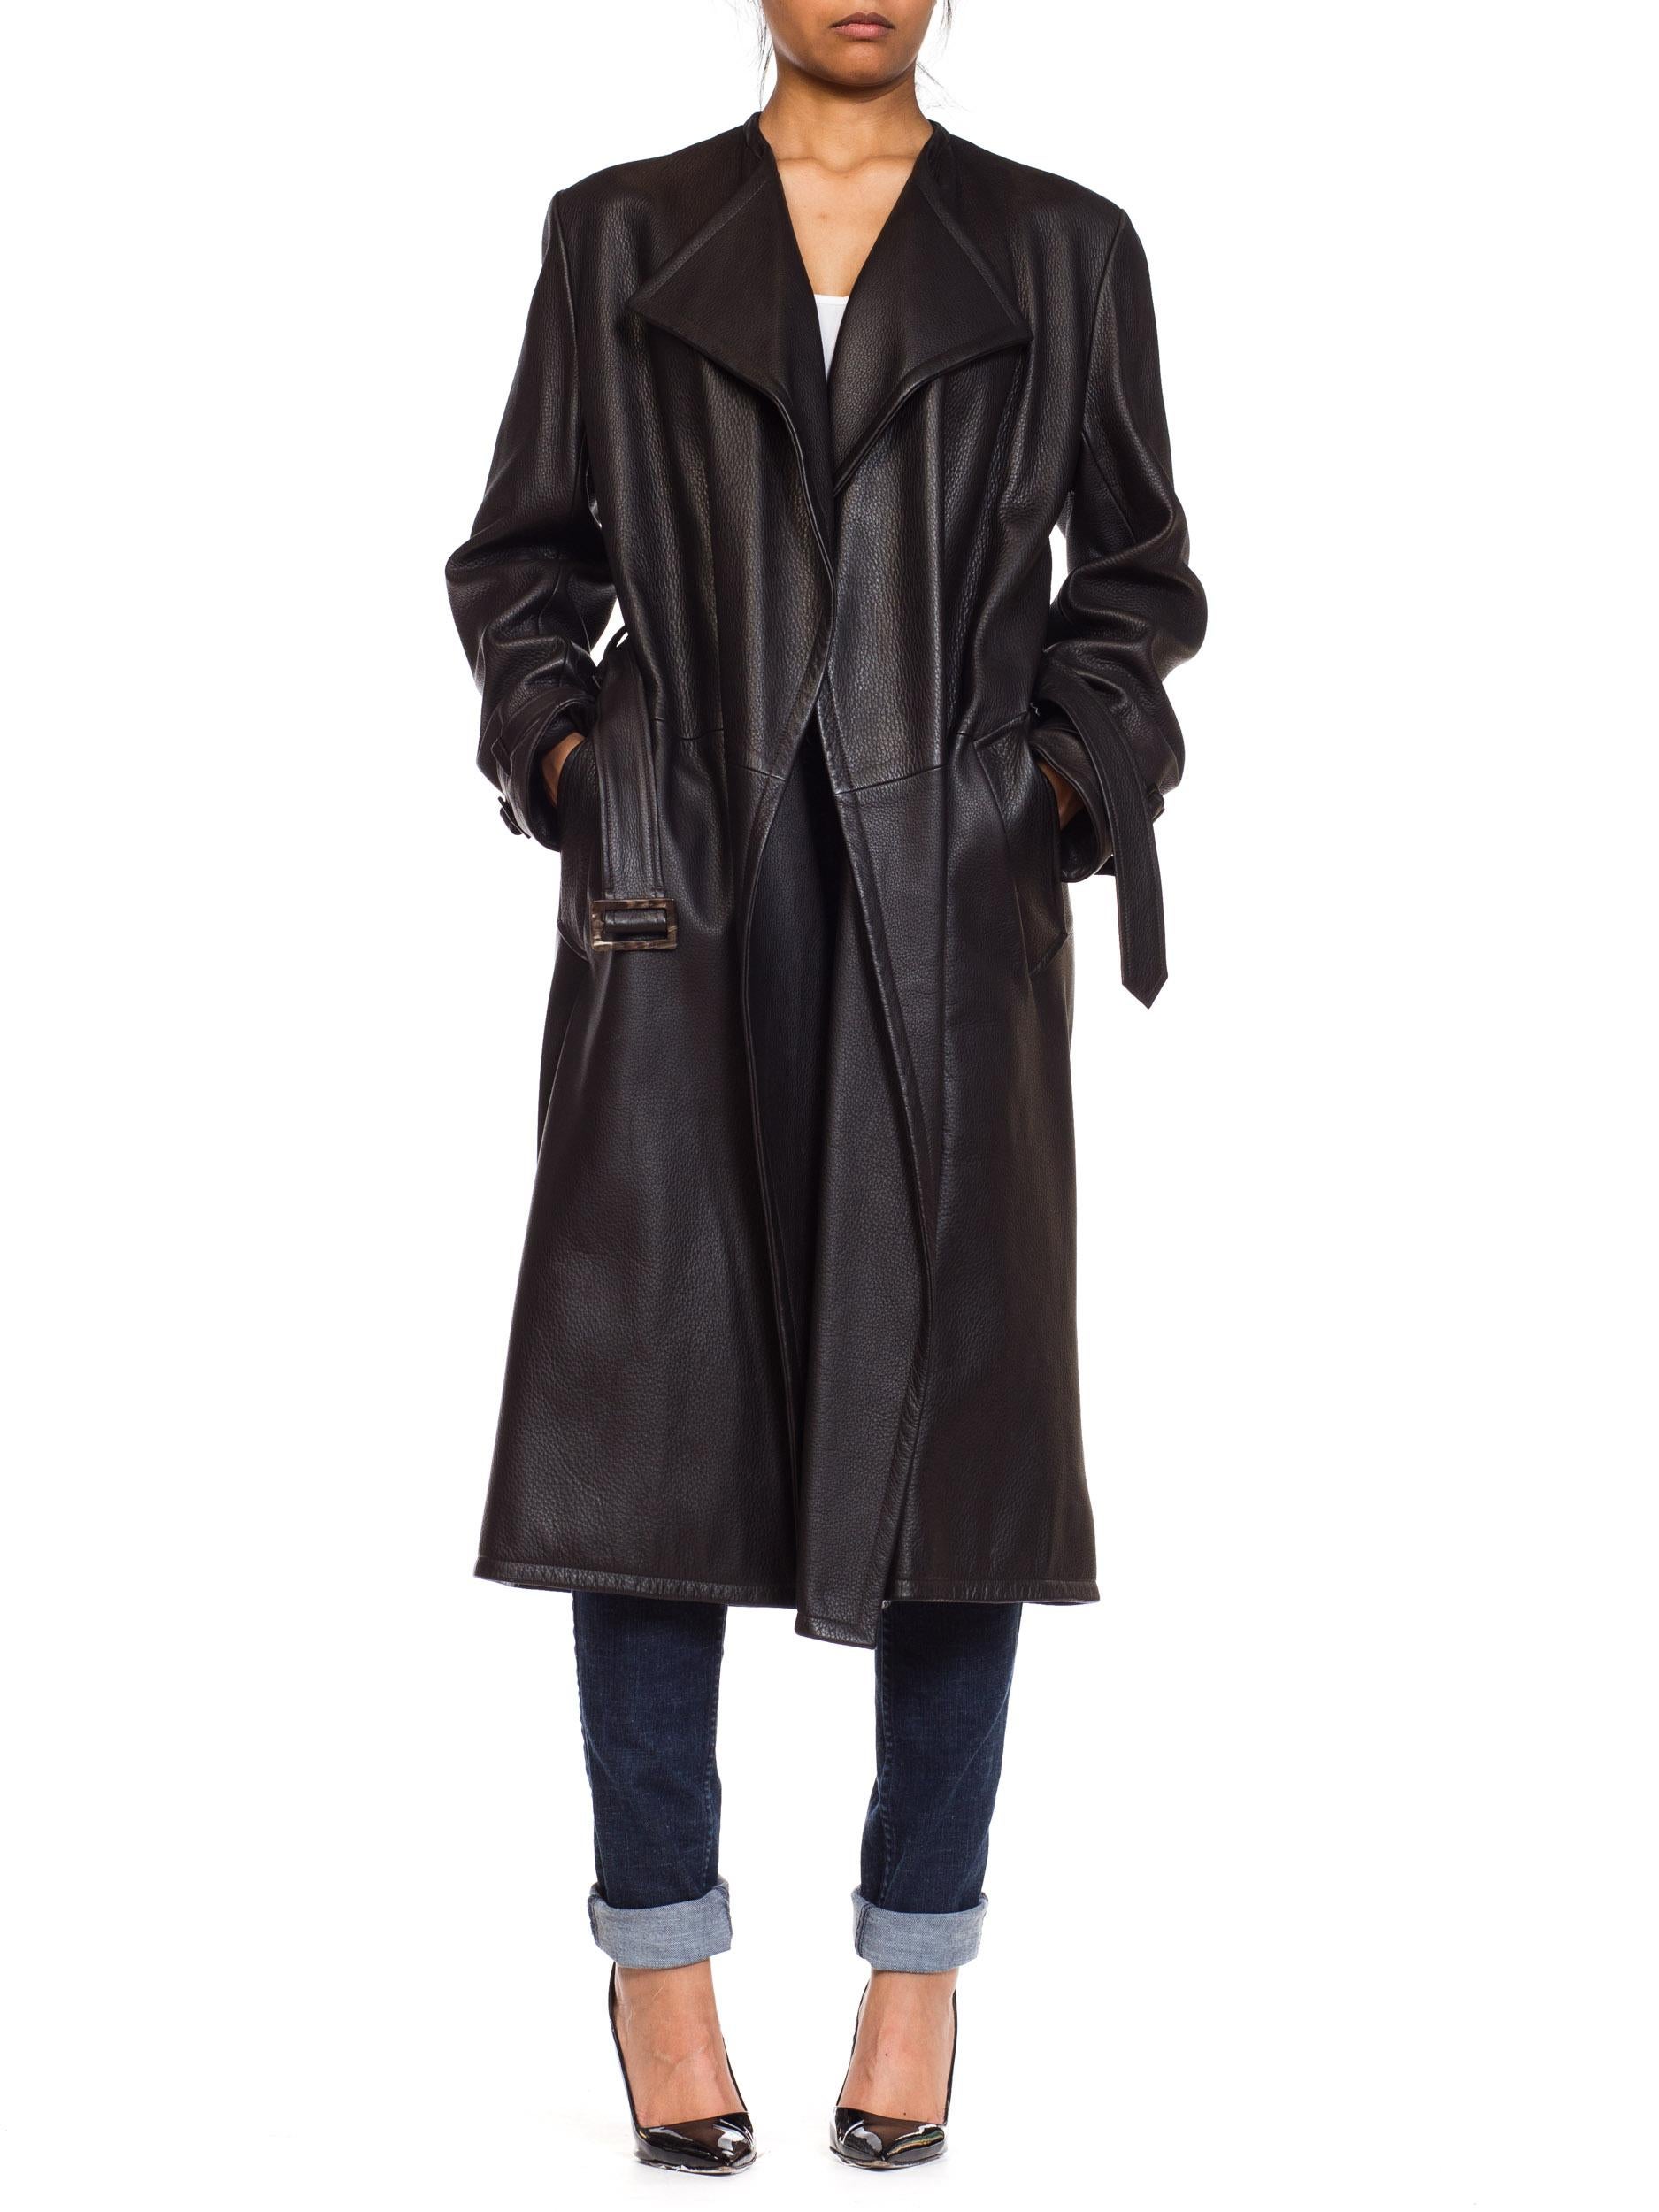 Margiela Hermes Luxe Minimalist Leather Trenchcoat  2